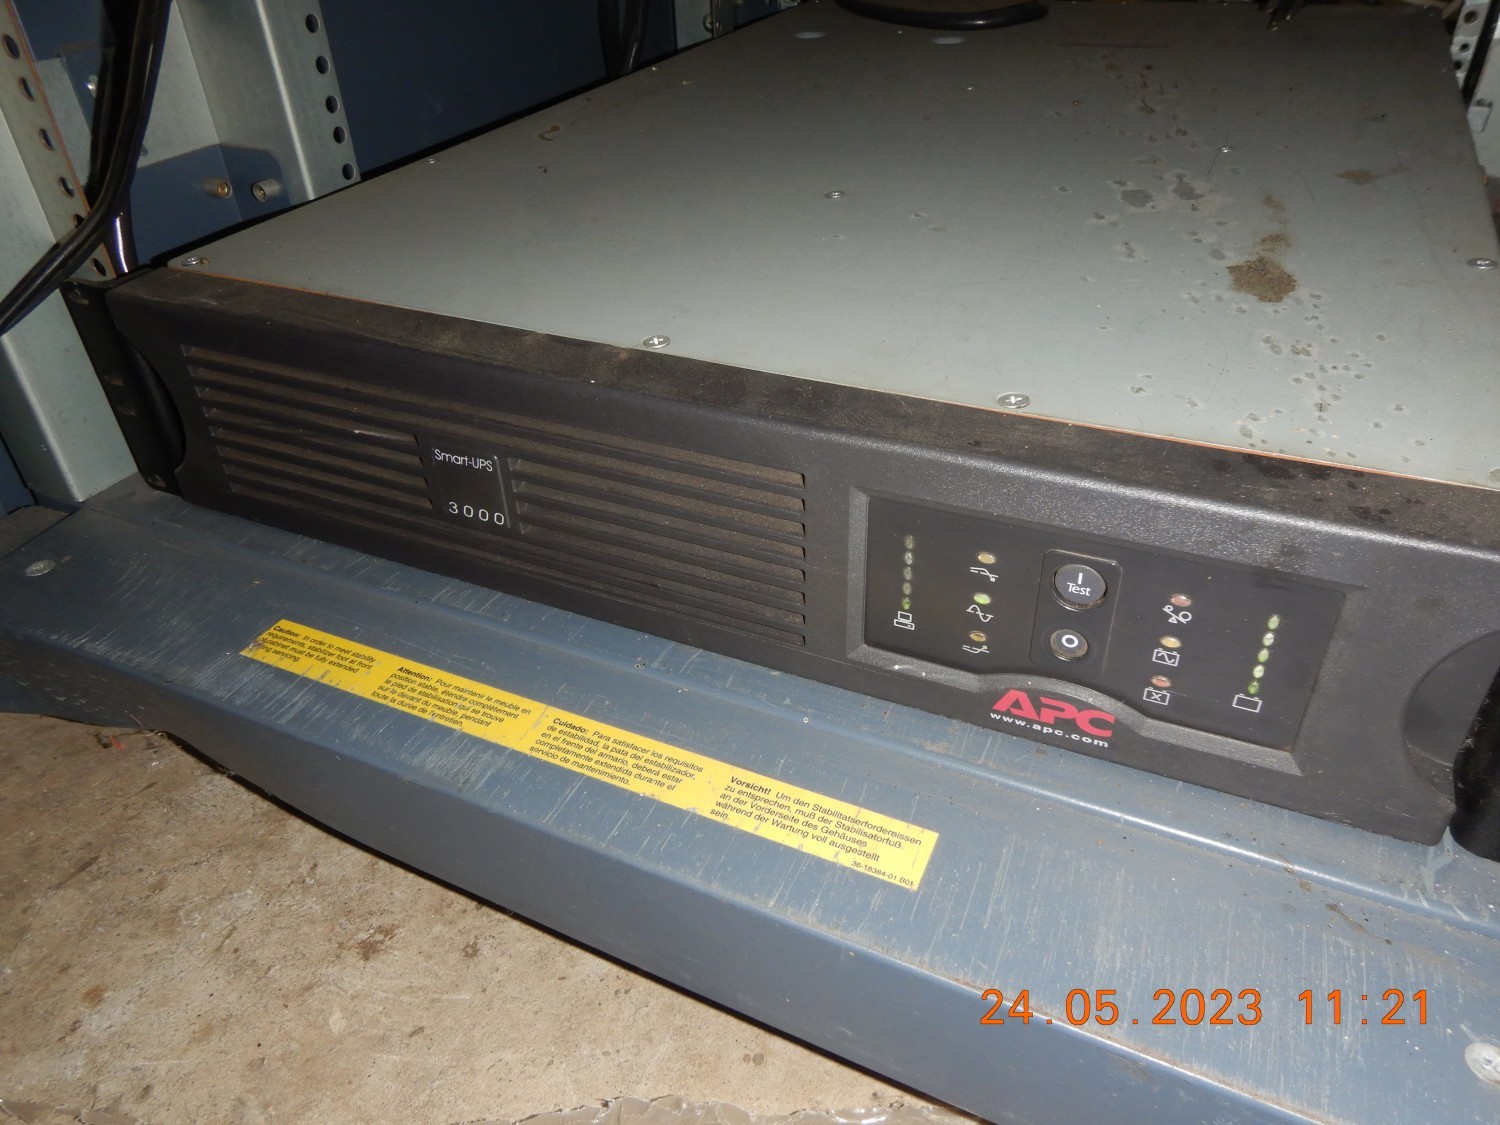 2-x-dell-r900-4-x-4-16-core-zeon-servers-digital-server-rack-3000-watt-powerware-ups-with-new-batteries-may-2022-big-15